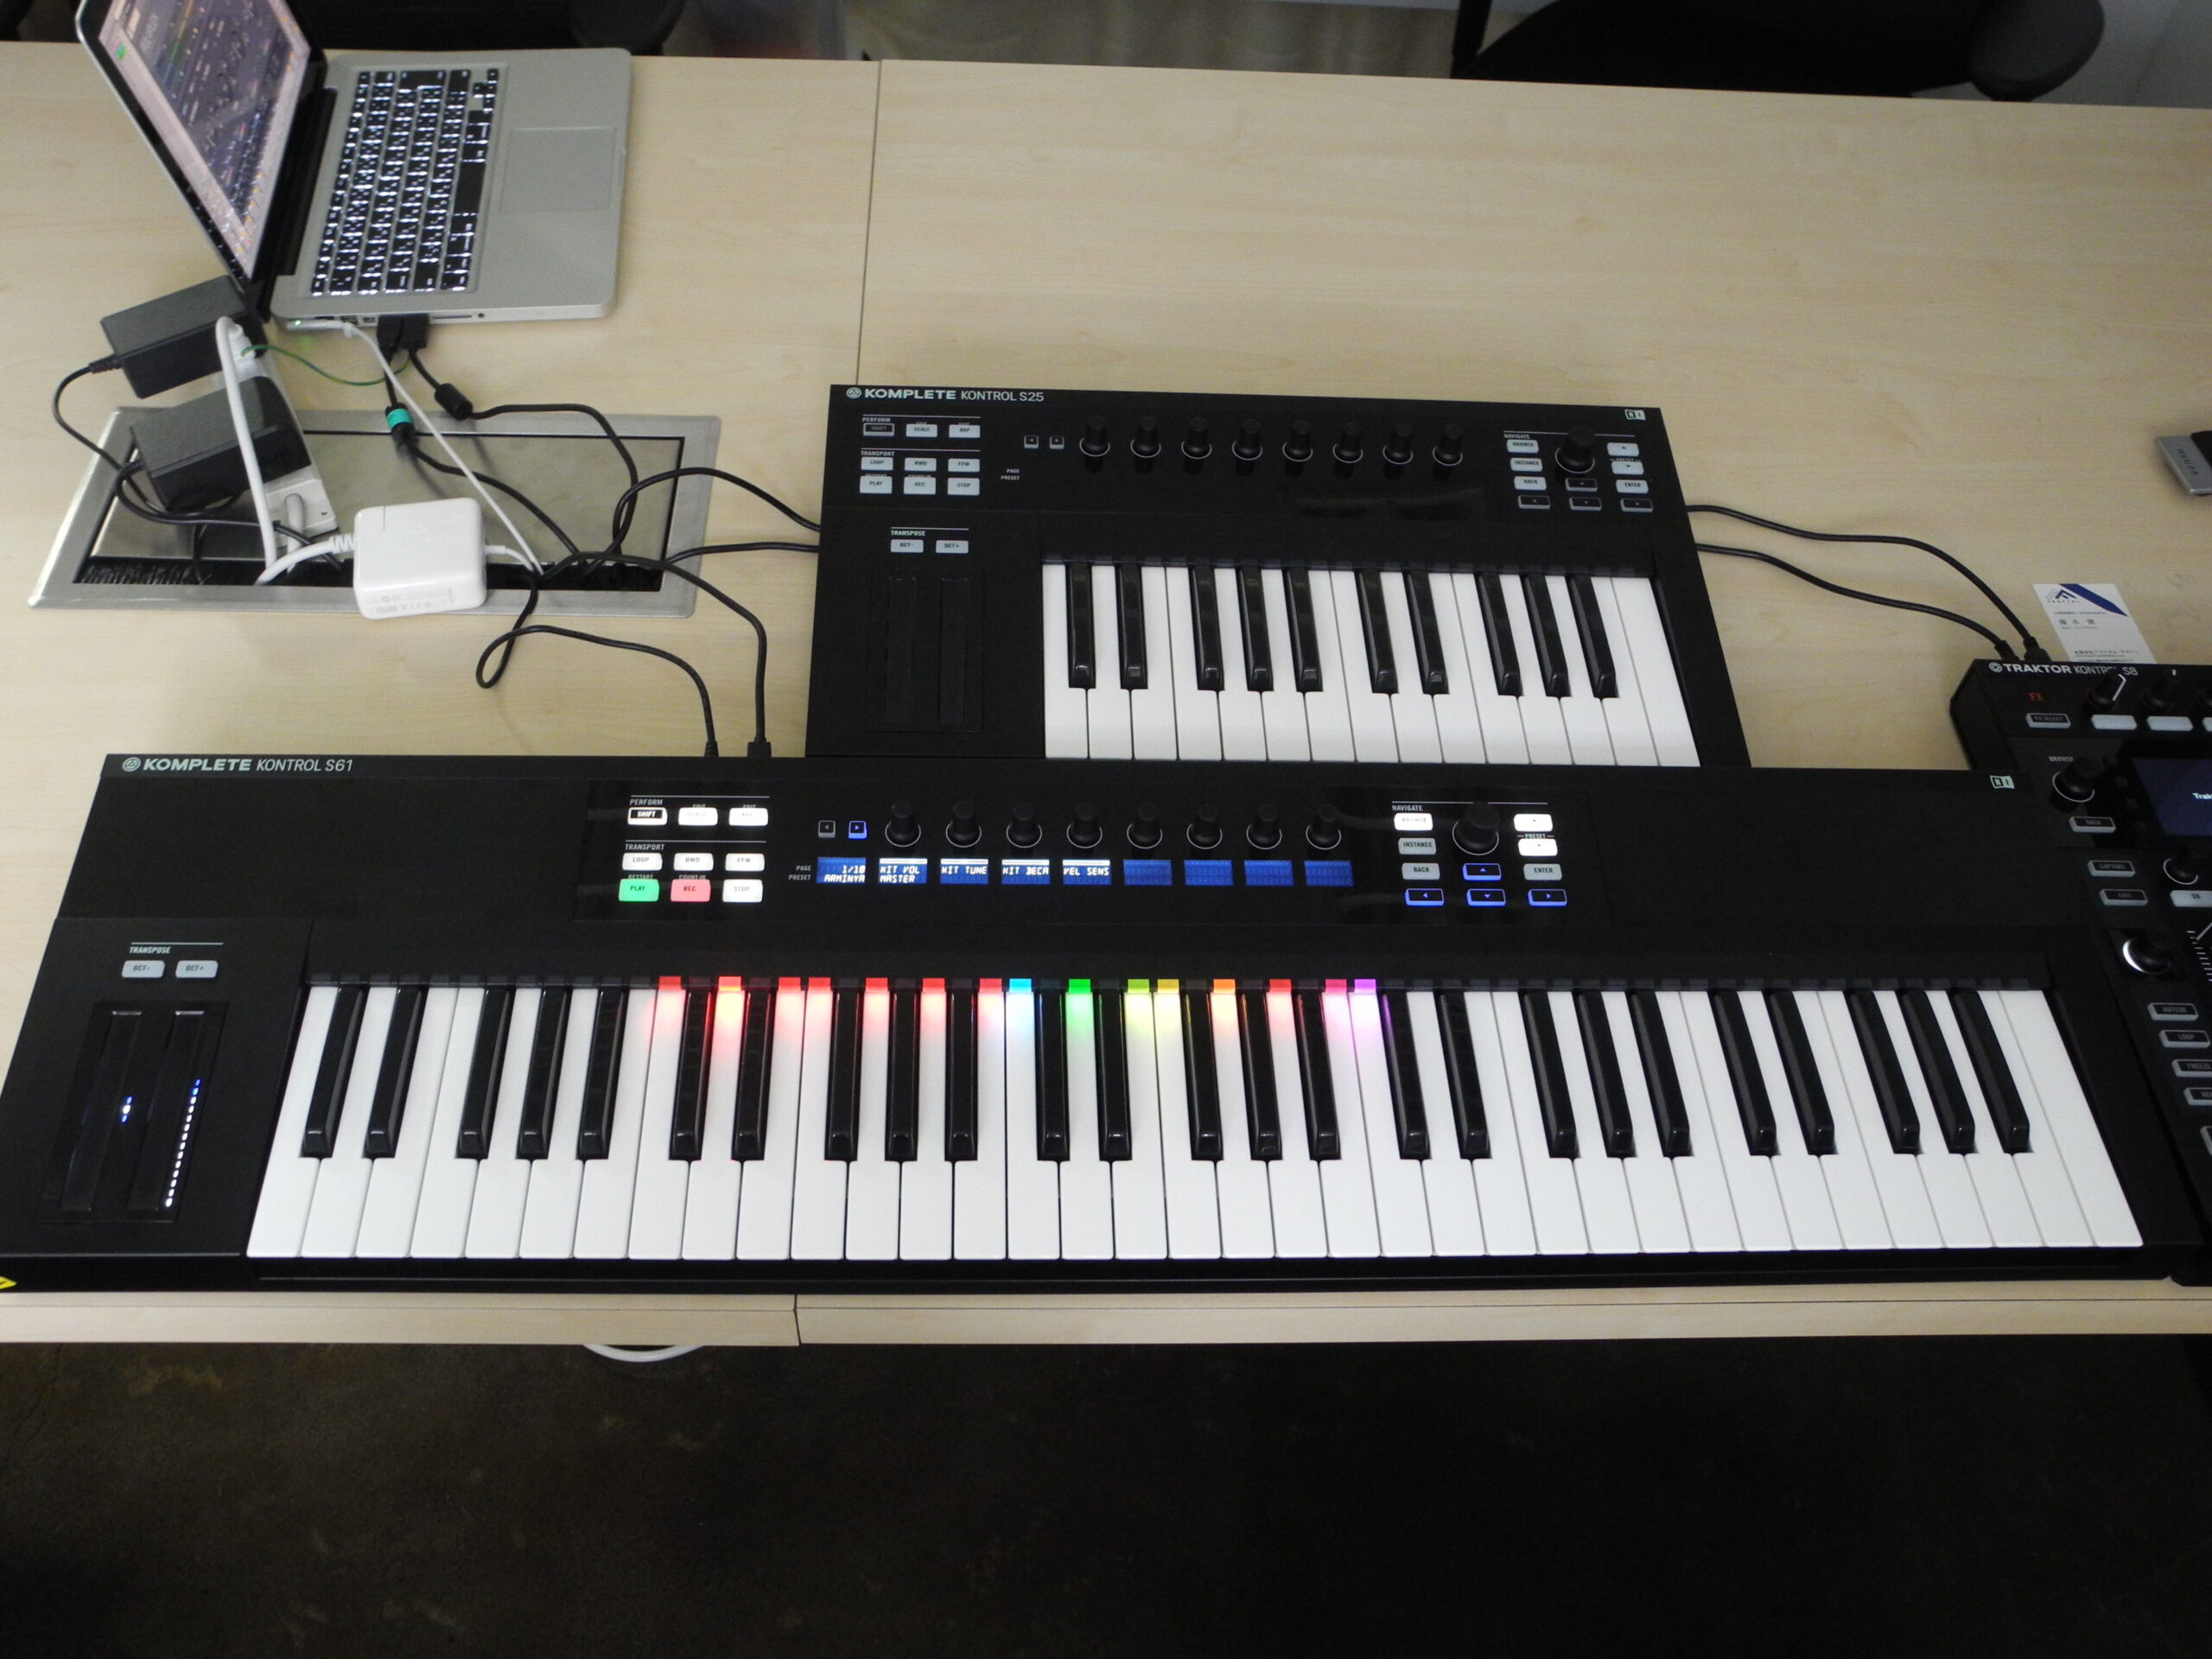 NIからUSB-MIDIキーボード、KOMPLETE KONTROL Sシリーズが登場 | DTM 